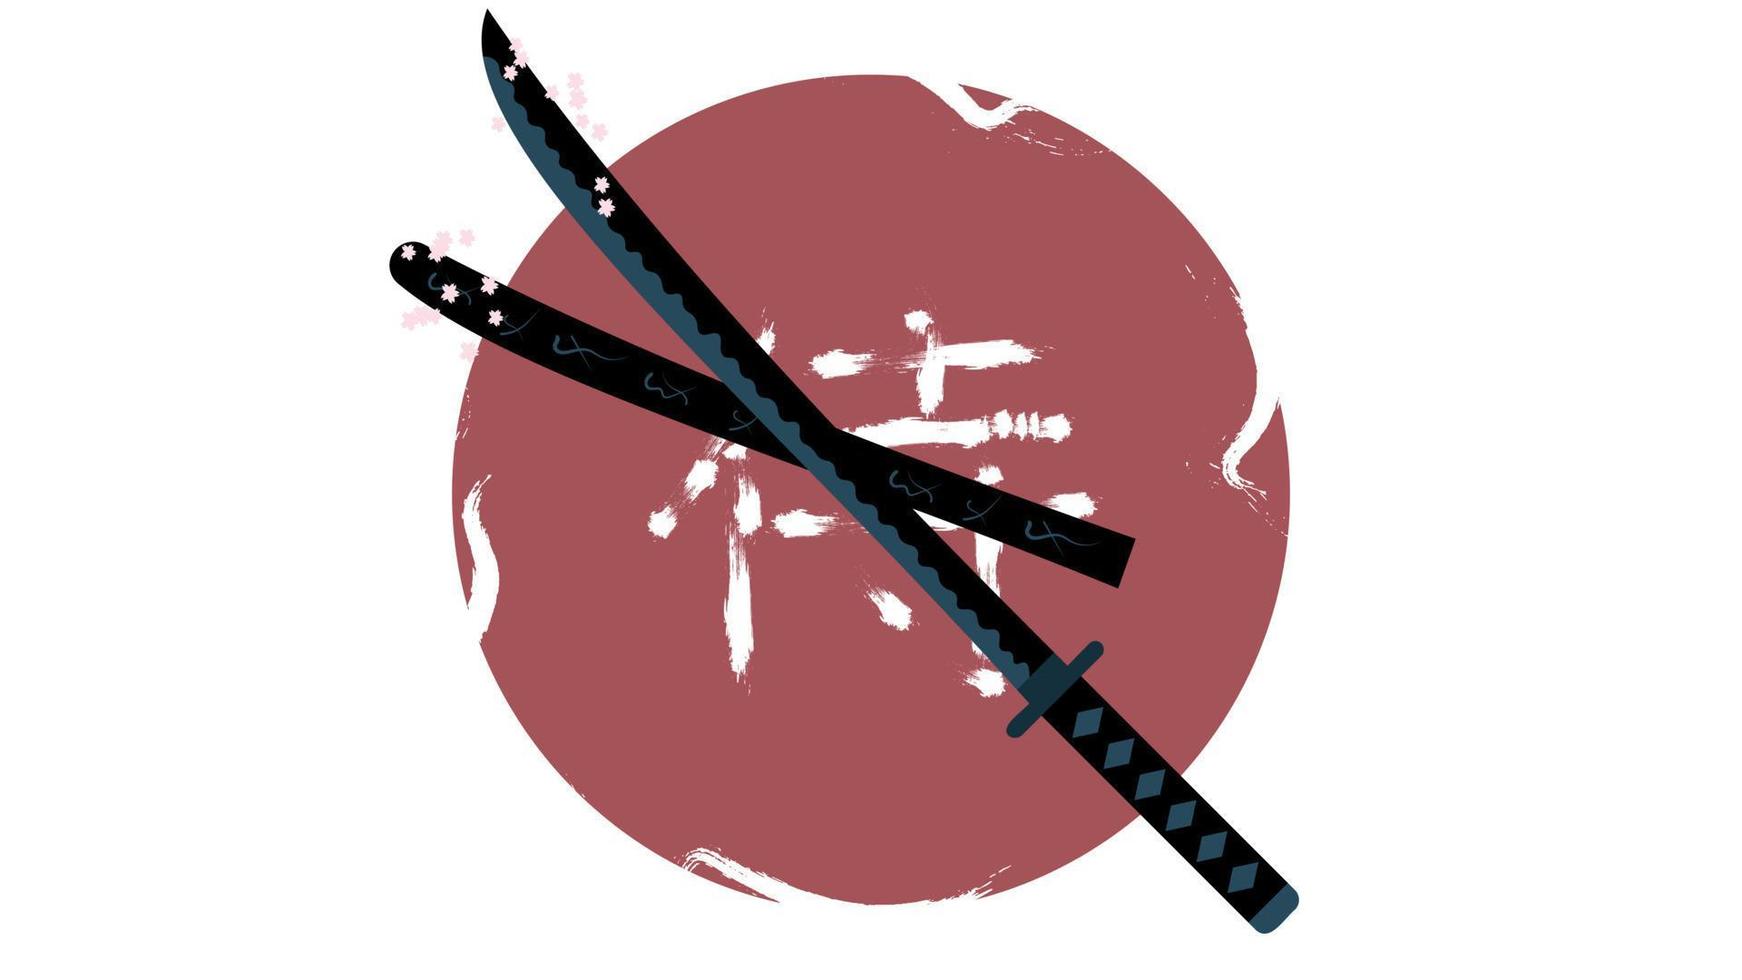 Samurai Katana with cherry blossoms vector